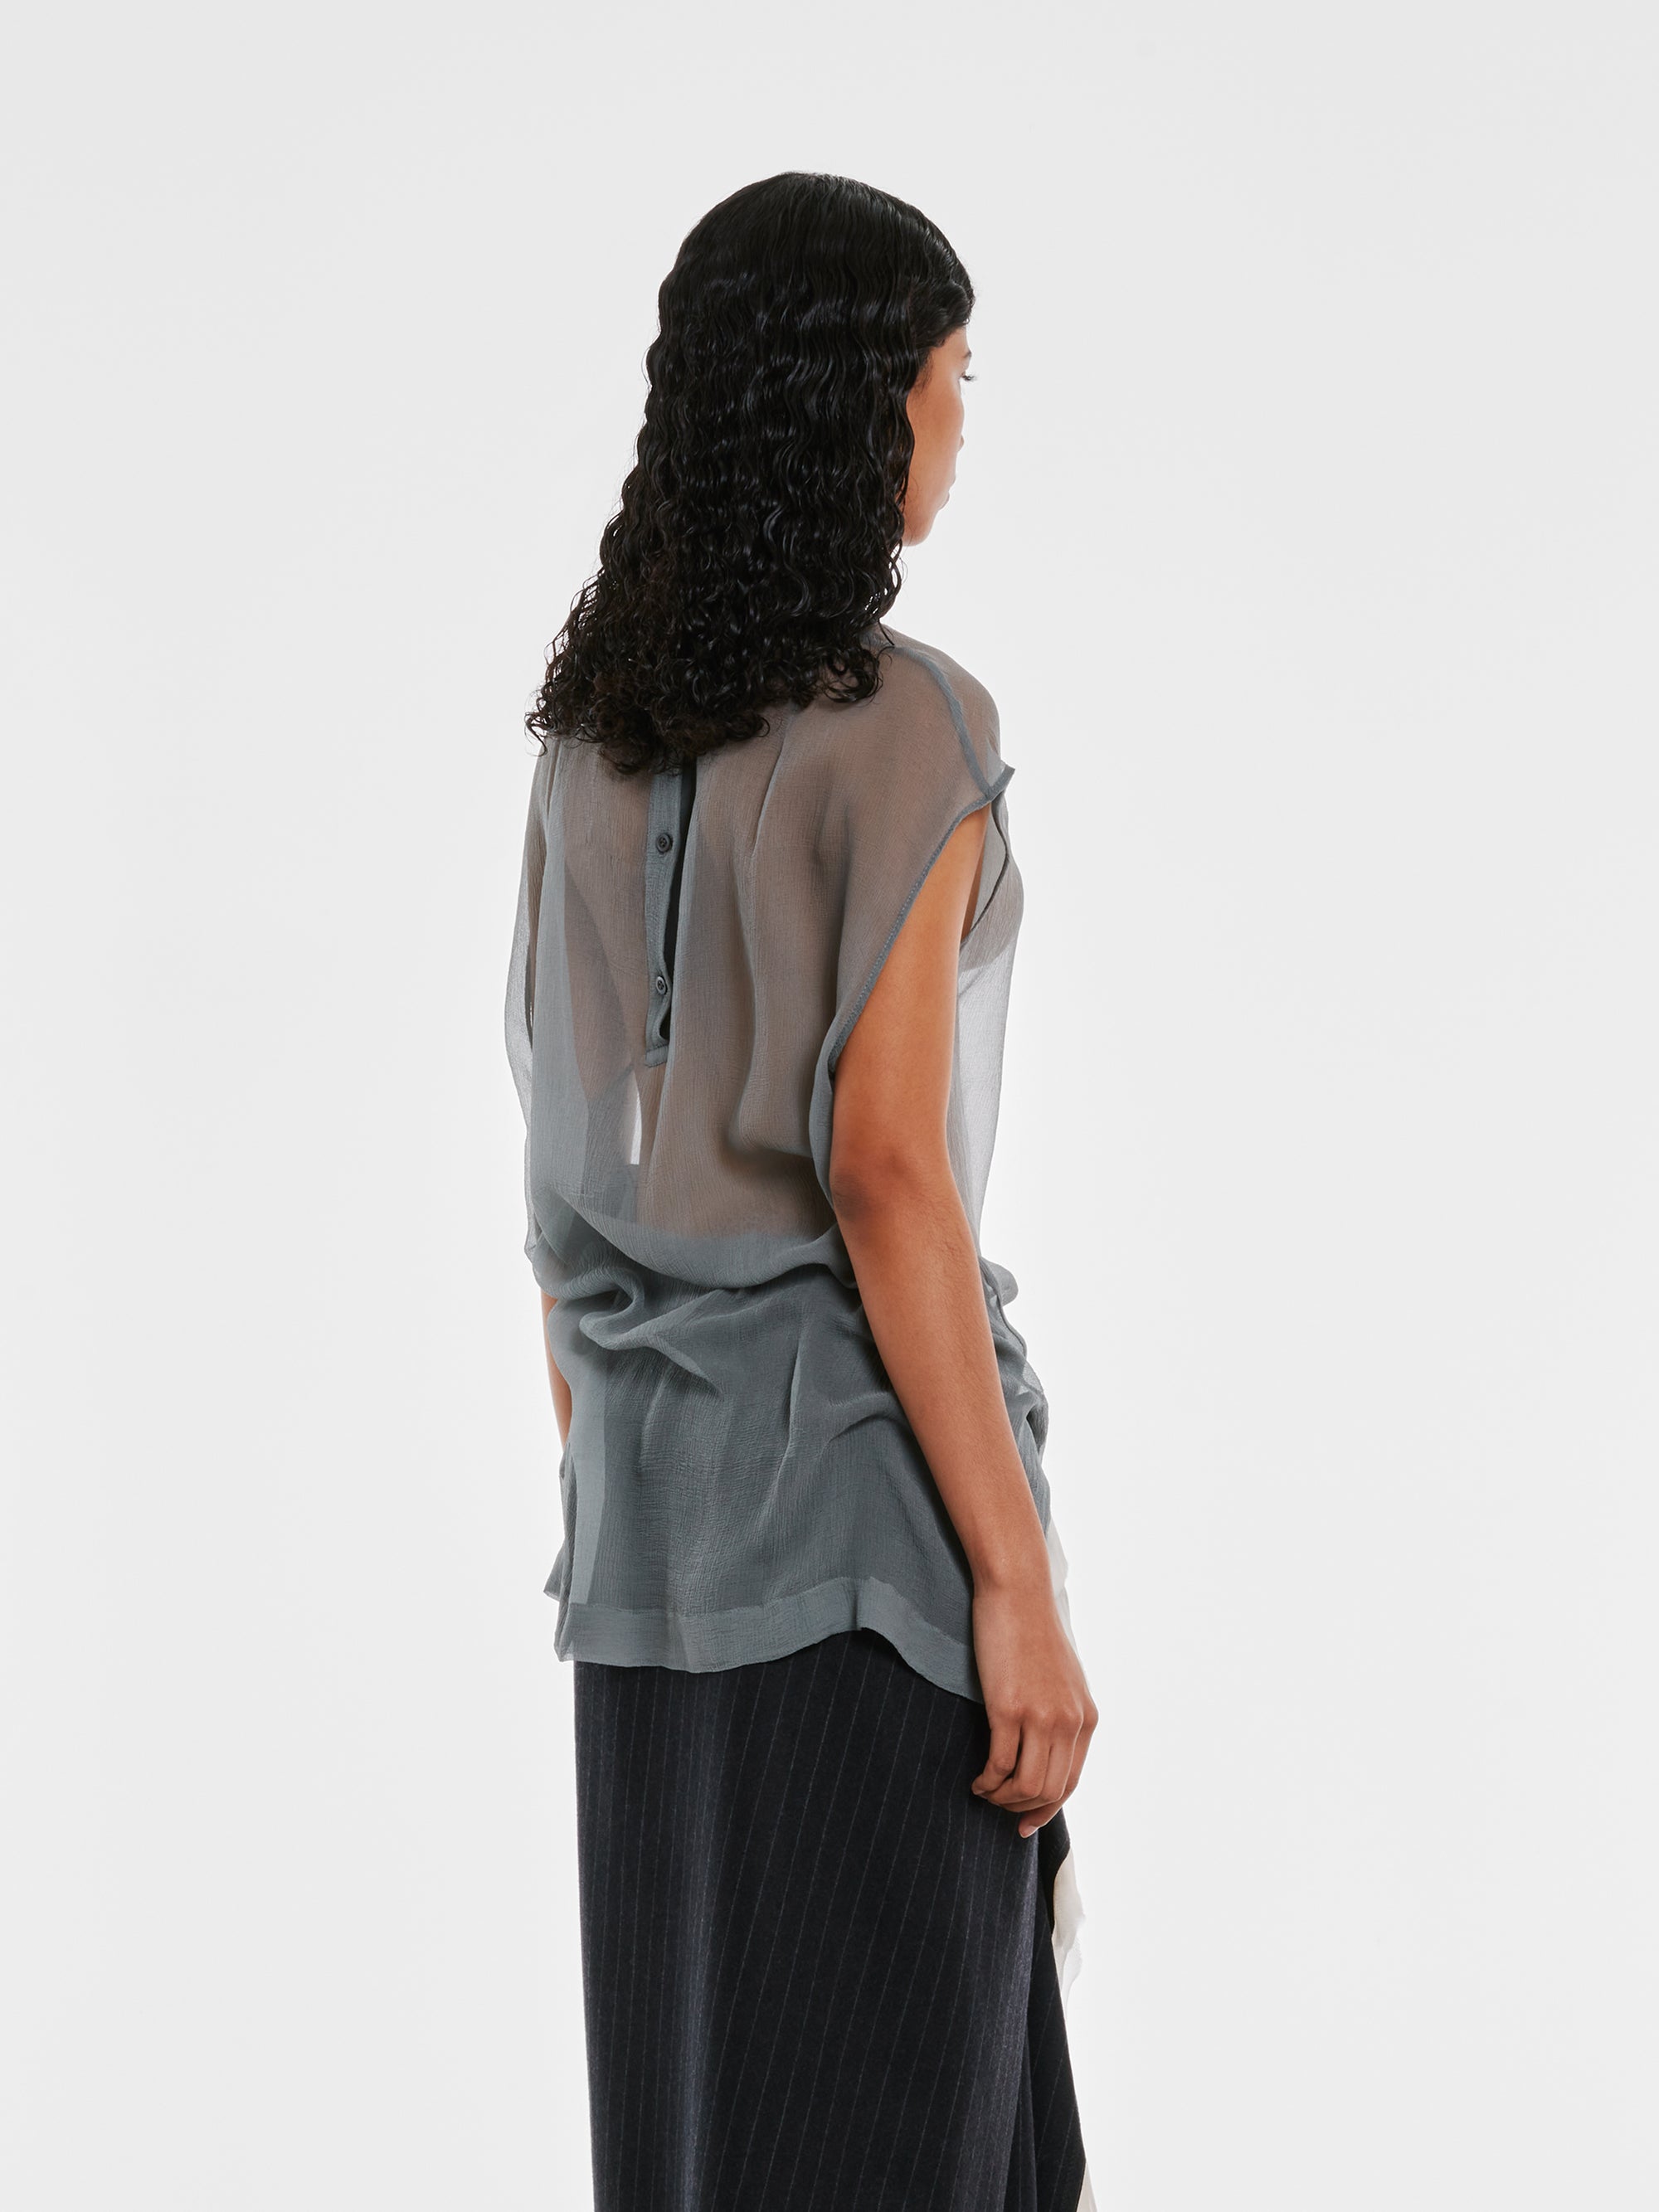 Dries Van Noten - Women's Sleeveless Silk Top - (Light Grey) view 3